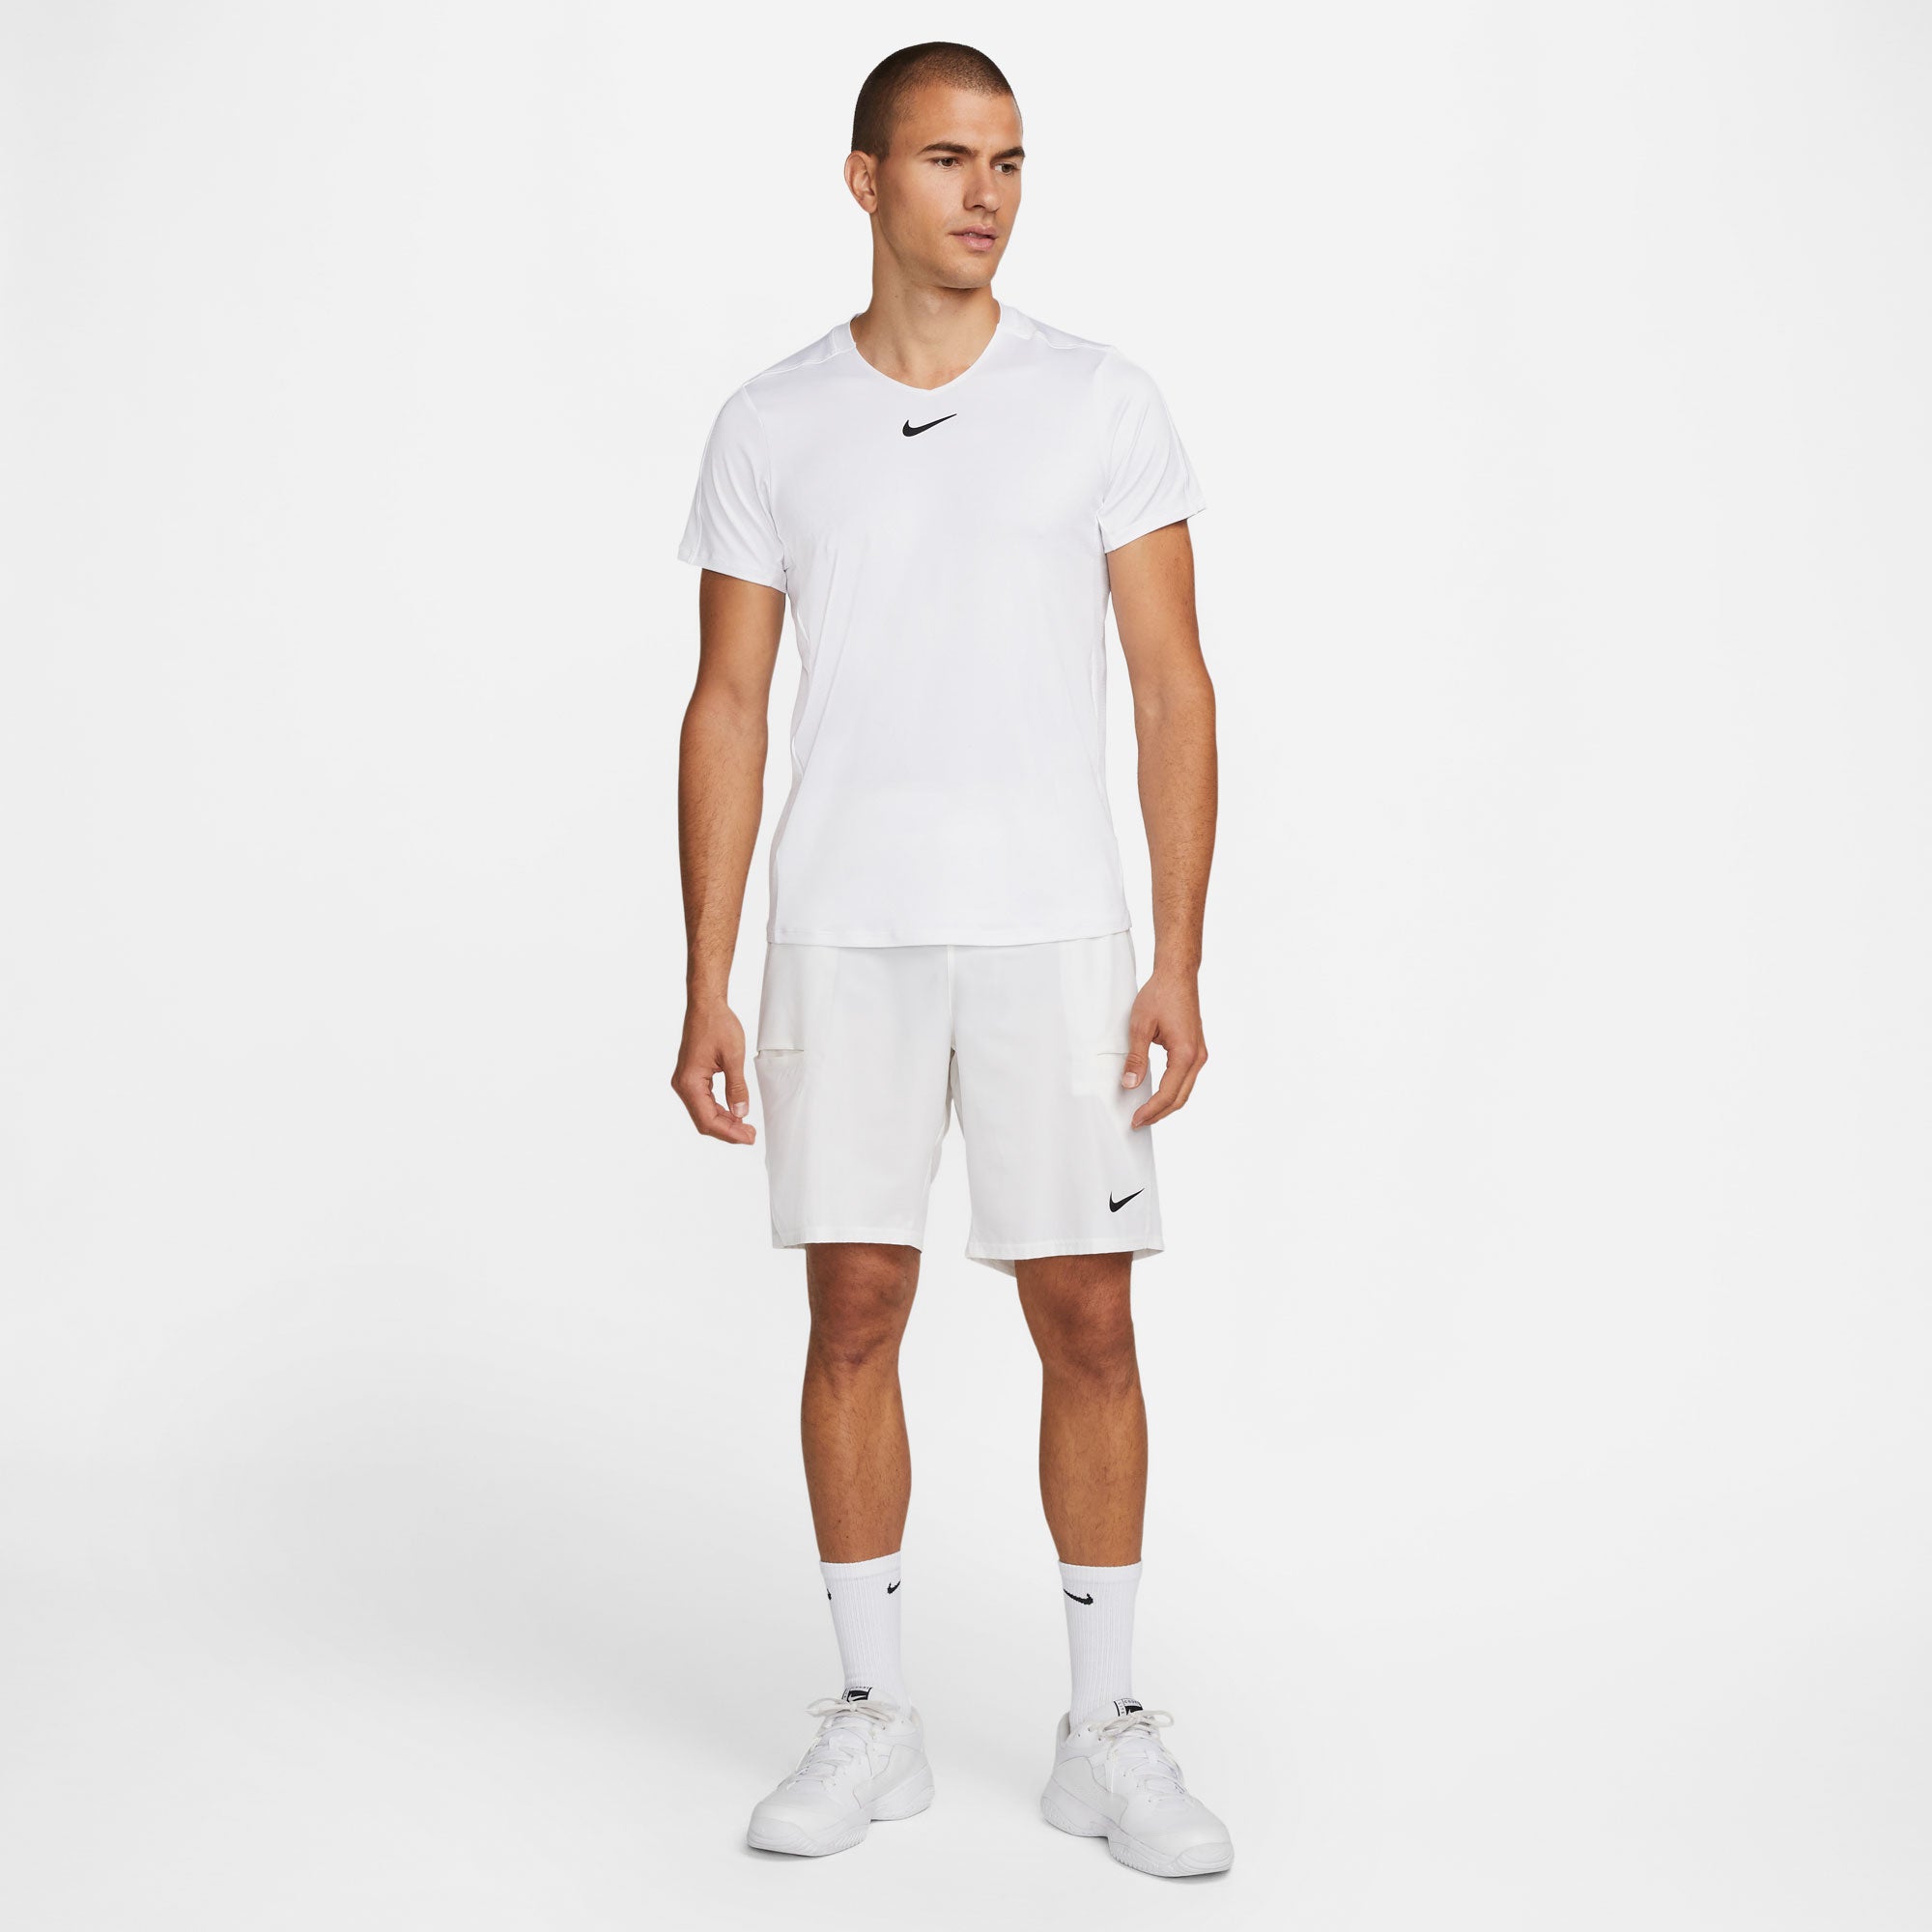 NikeCourt Dri-FIT Advantage Men's Tennis Shirt White (4)